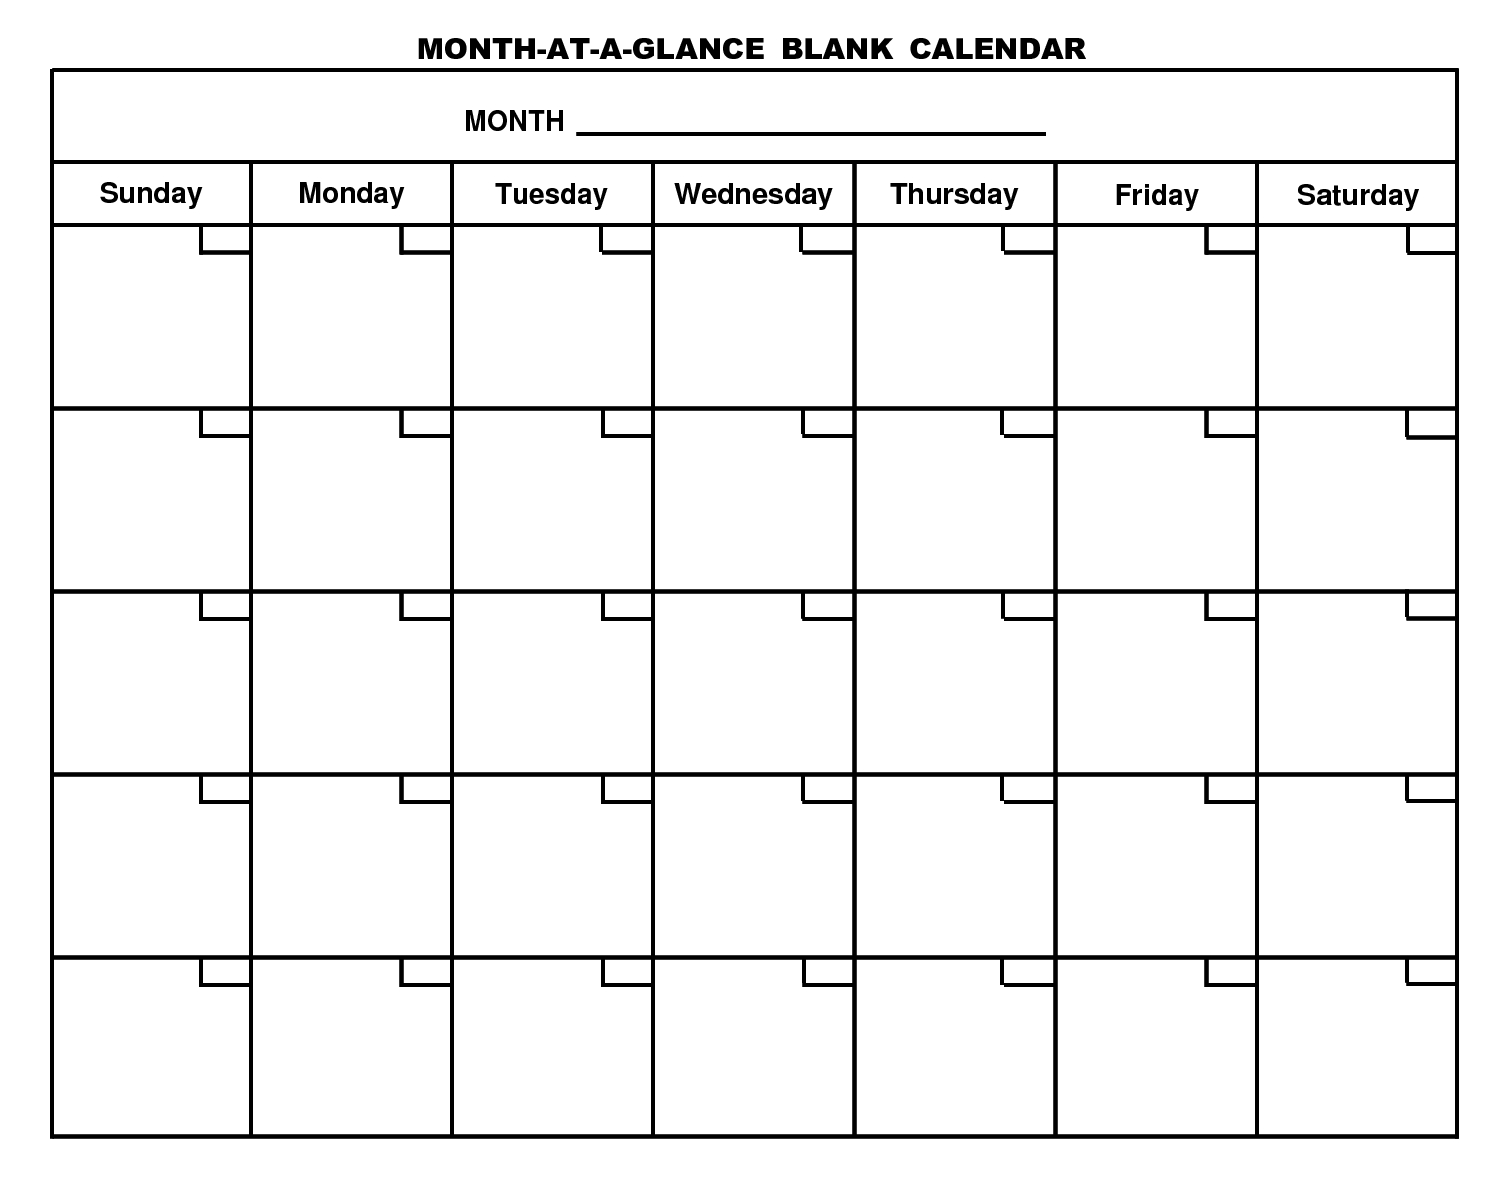 8 X 10 Prinable Blank Monthly Calendar Calendar Template Printable